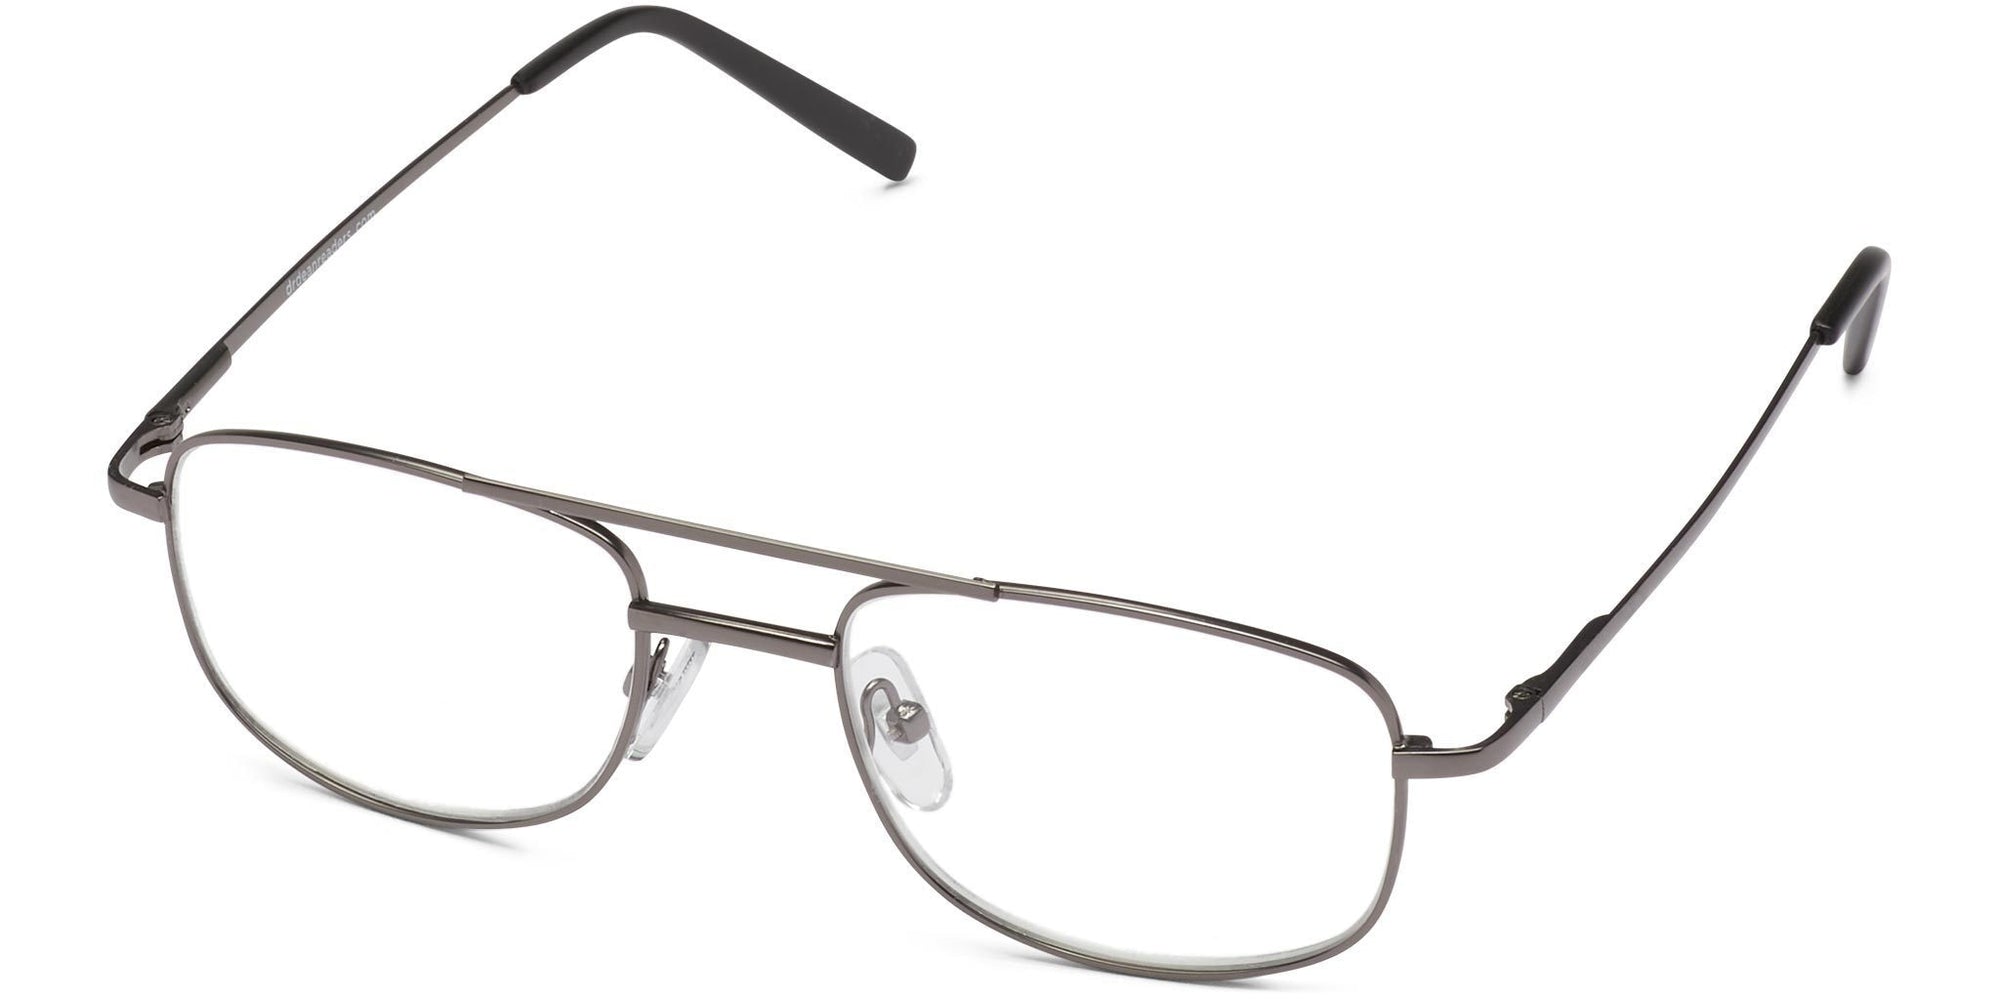 Ripon - Gunmetal / 1.25 - Reading Glasses